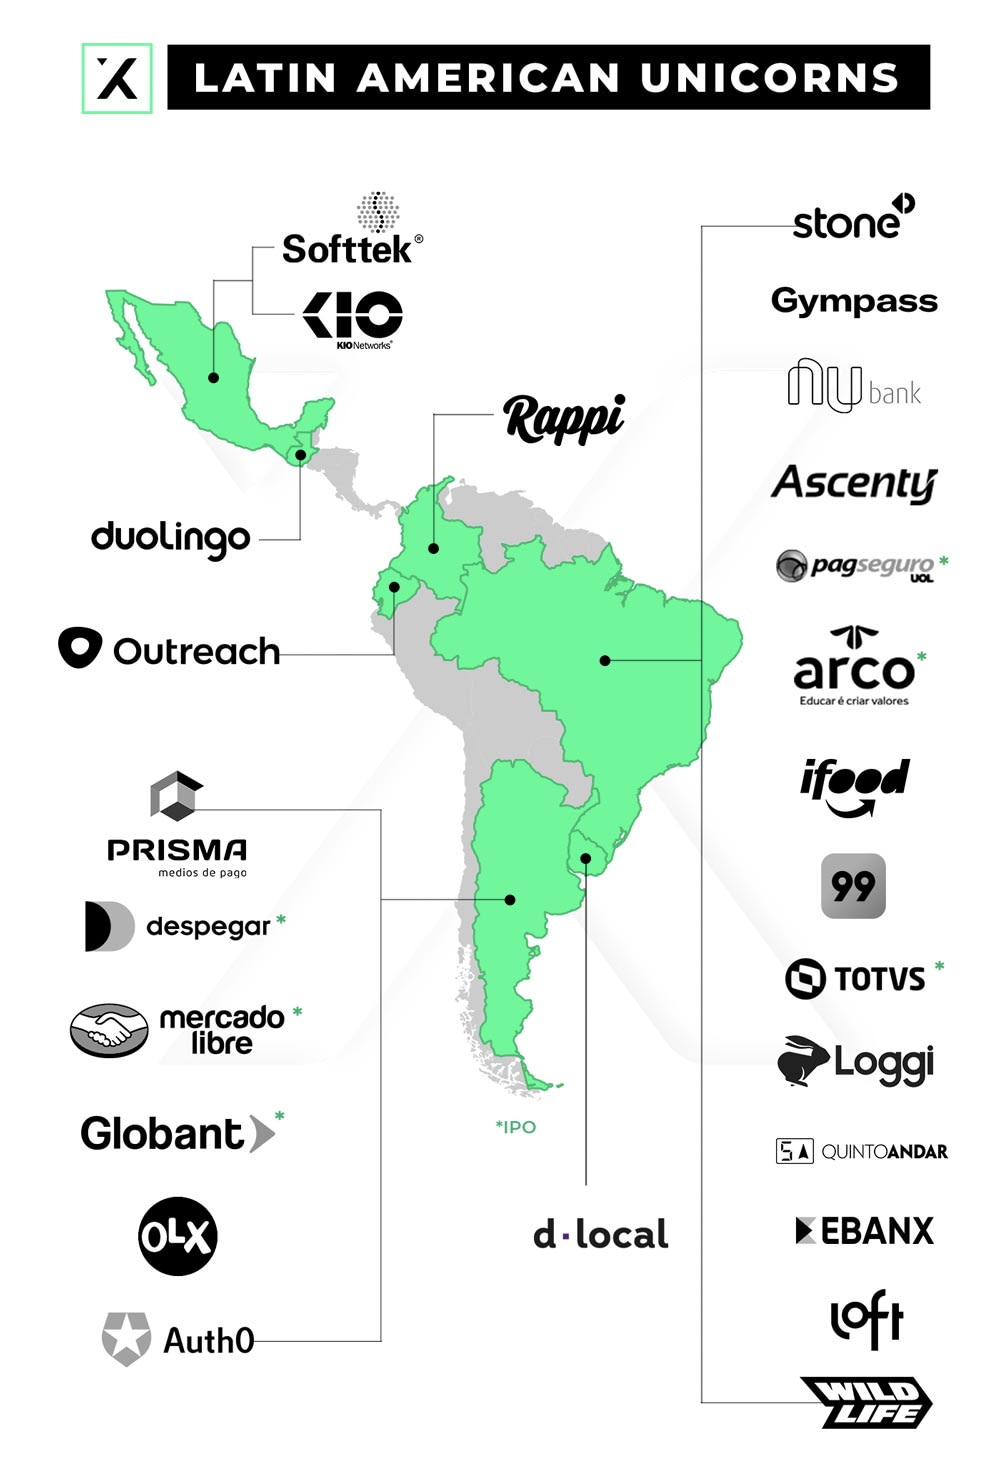 Startup unicorns in Latin America and South America